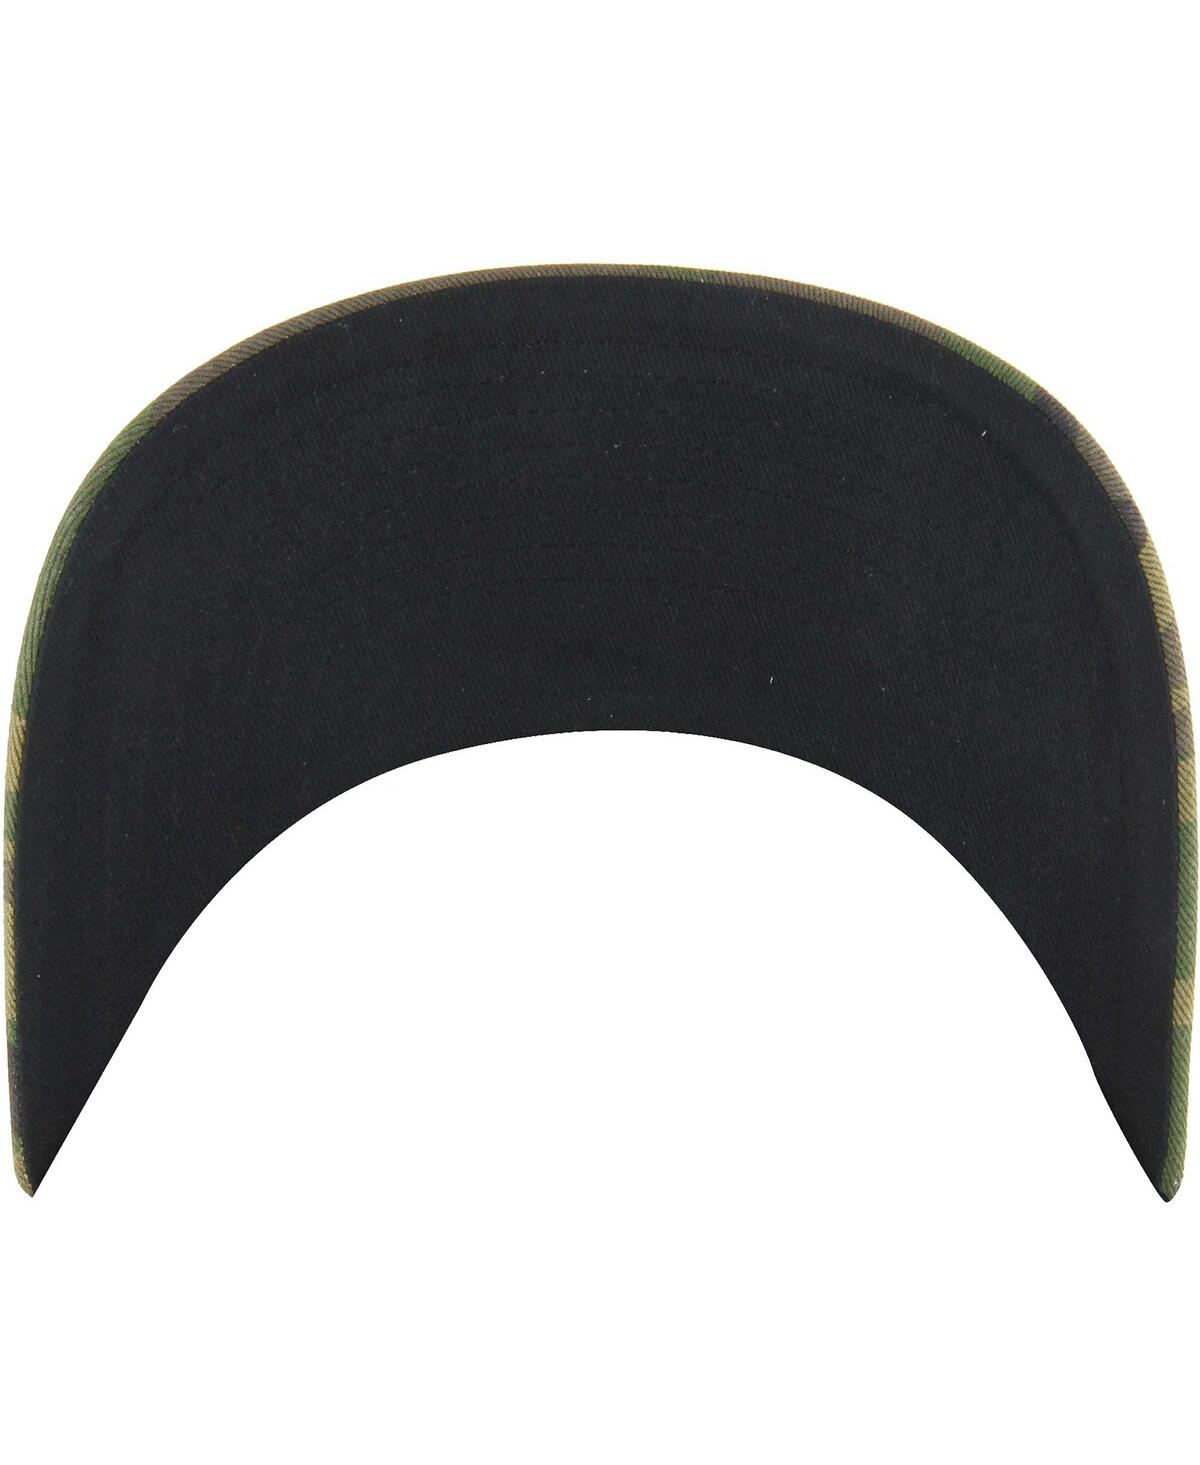 Shop 47 Brand Men's ' Camo Chicago White Sox Trucker Snapback Hat